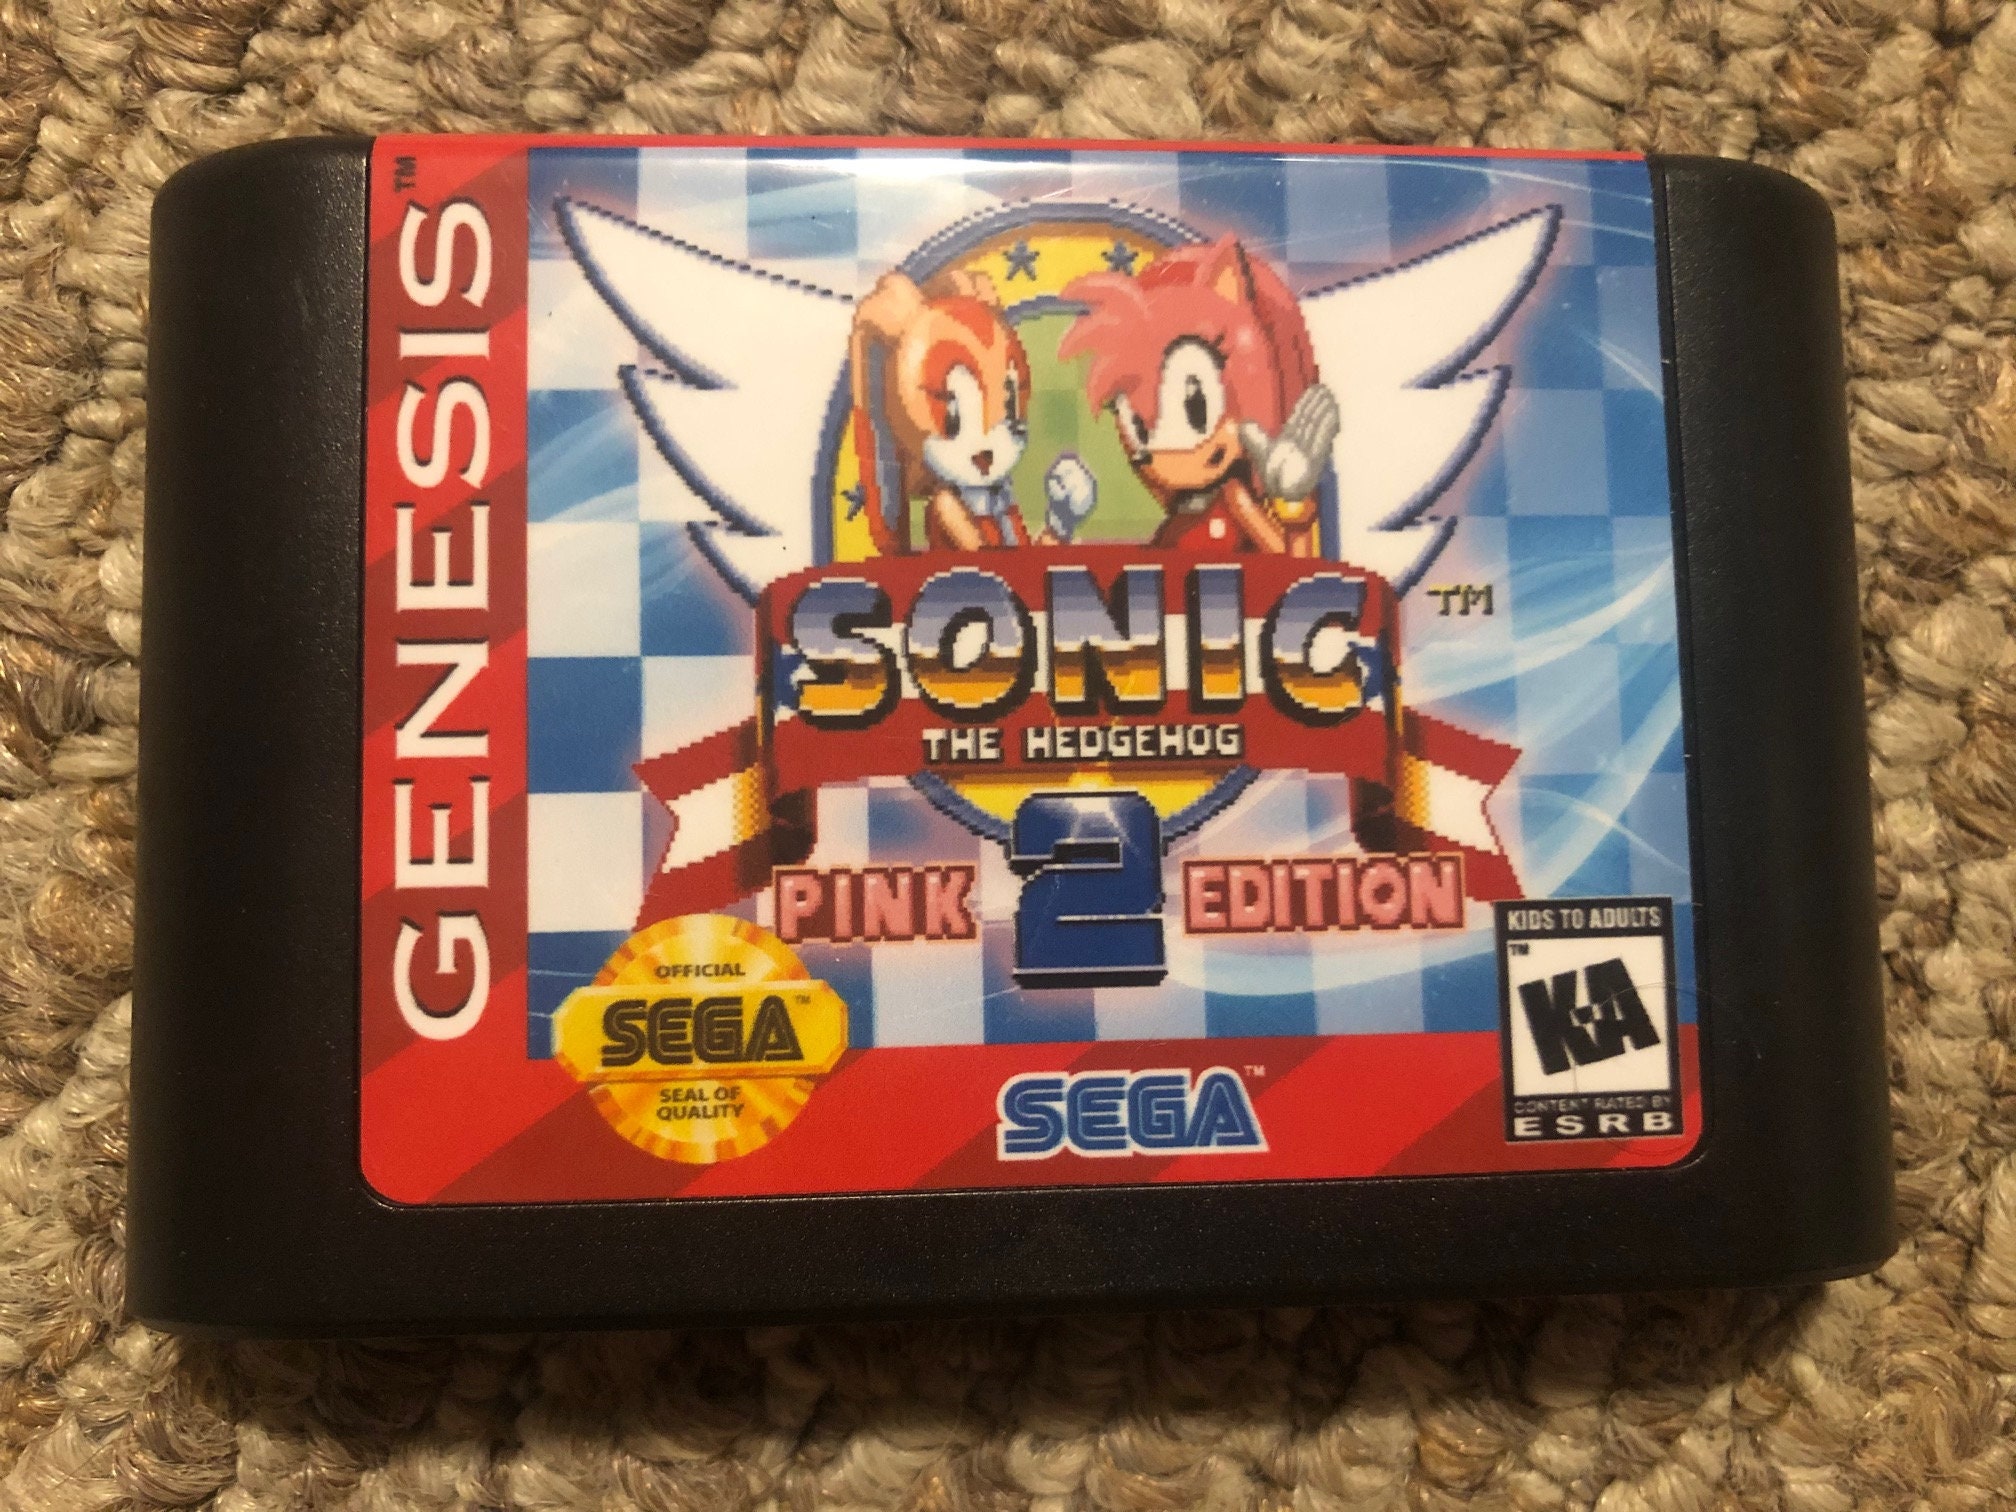 Sonic Classic Heroes (Sega Genesis) - Region Free Reproduction Video Game  Cartridge - CrebbaTECH - High-Quality Retro Video Game Reproductions!